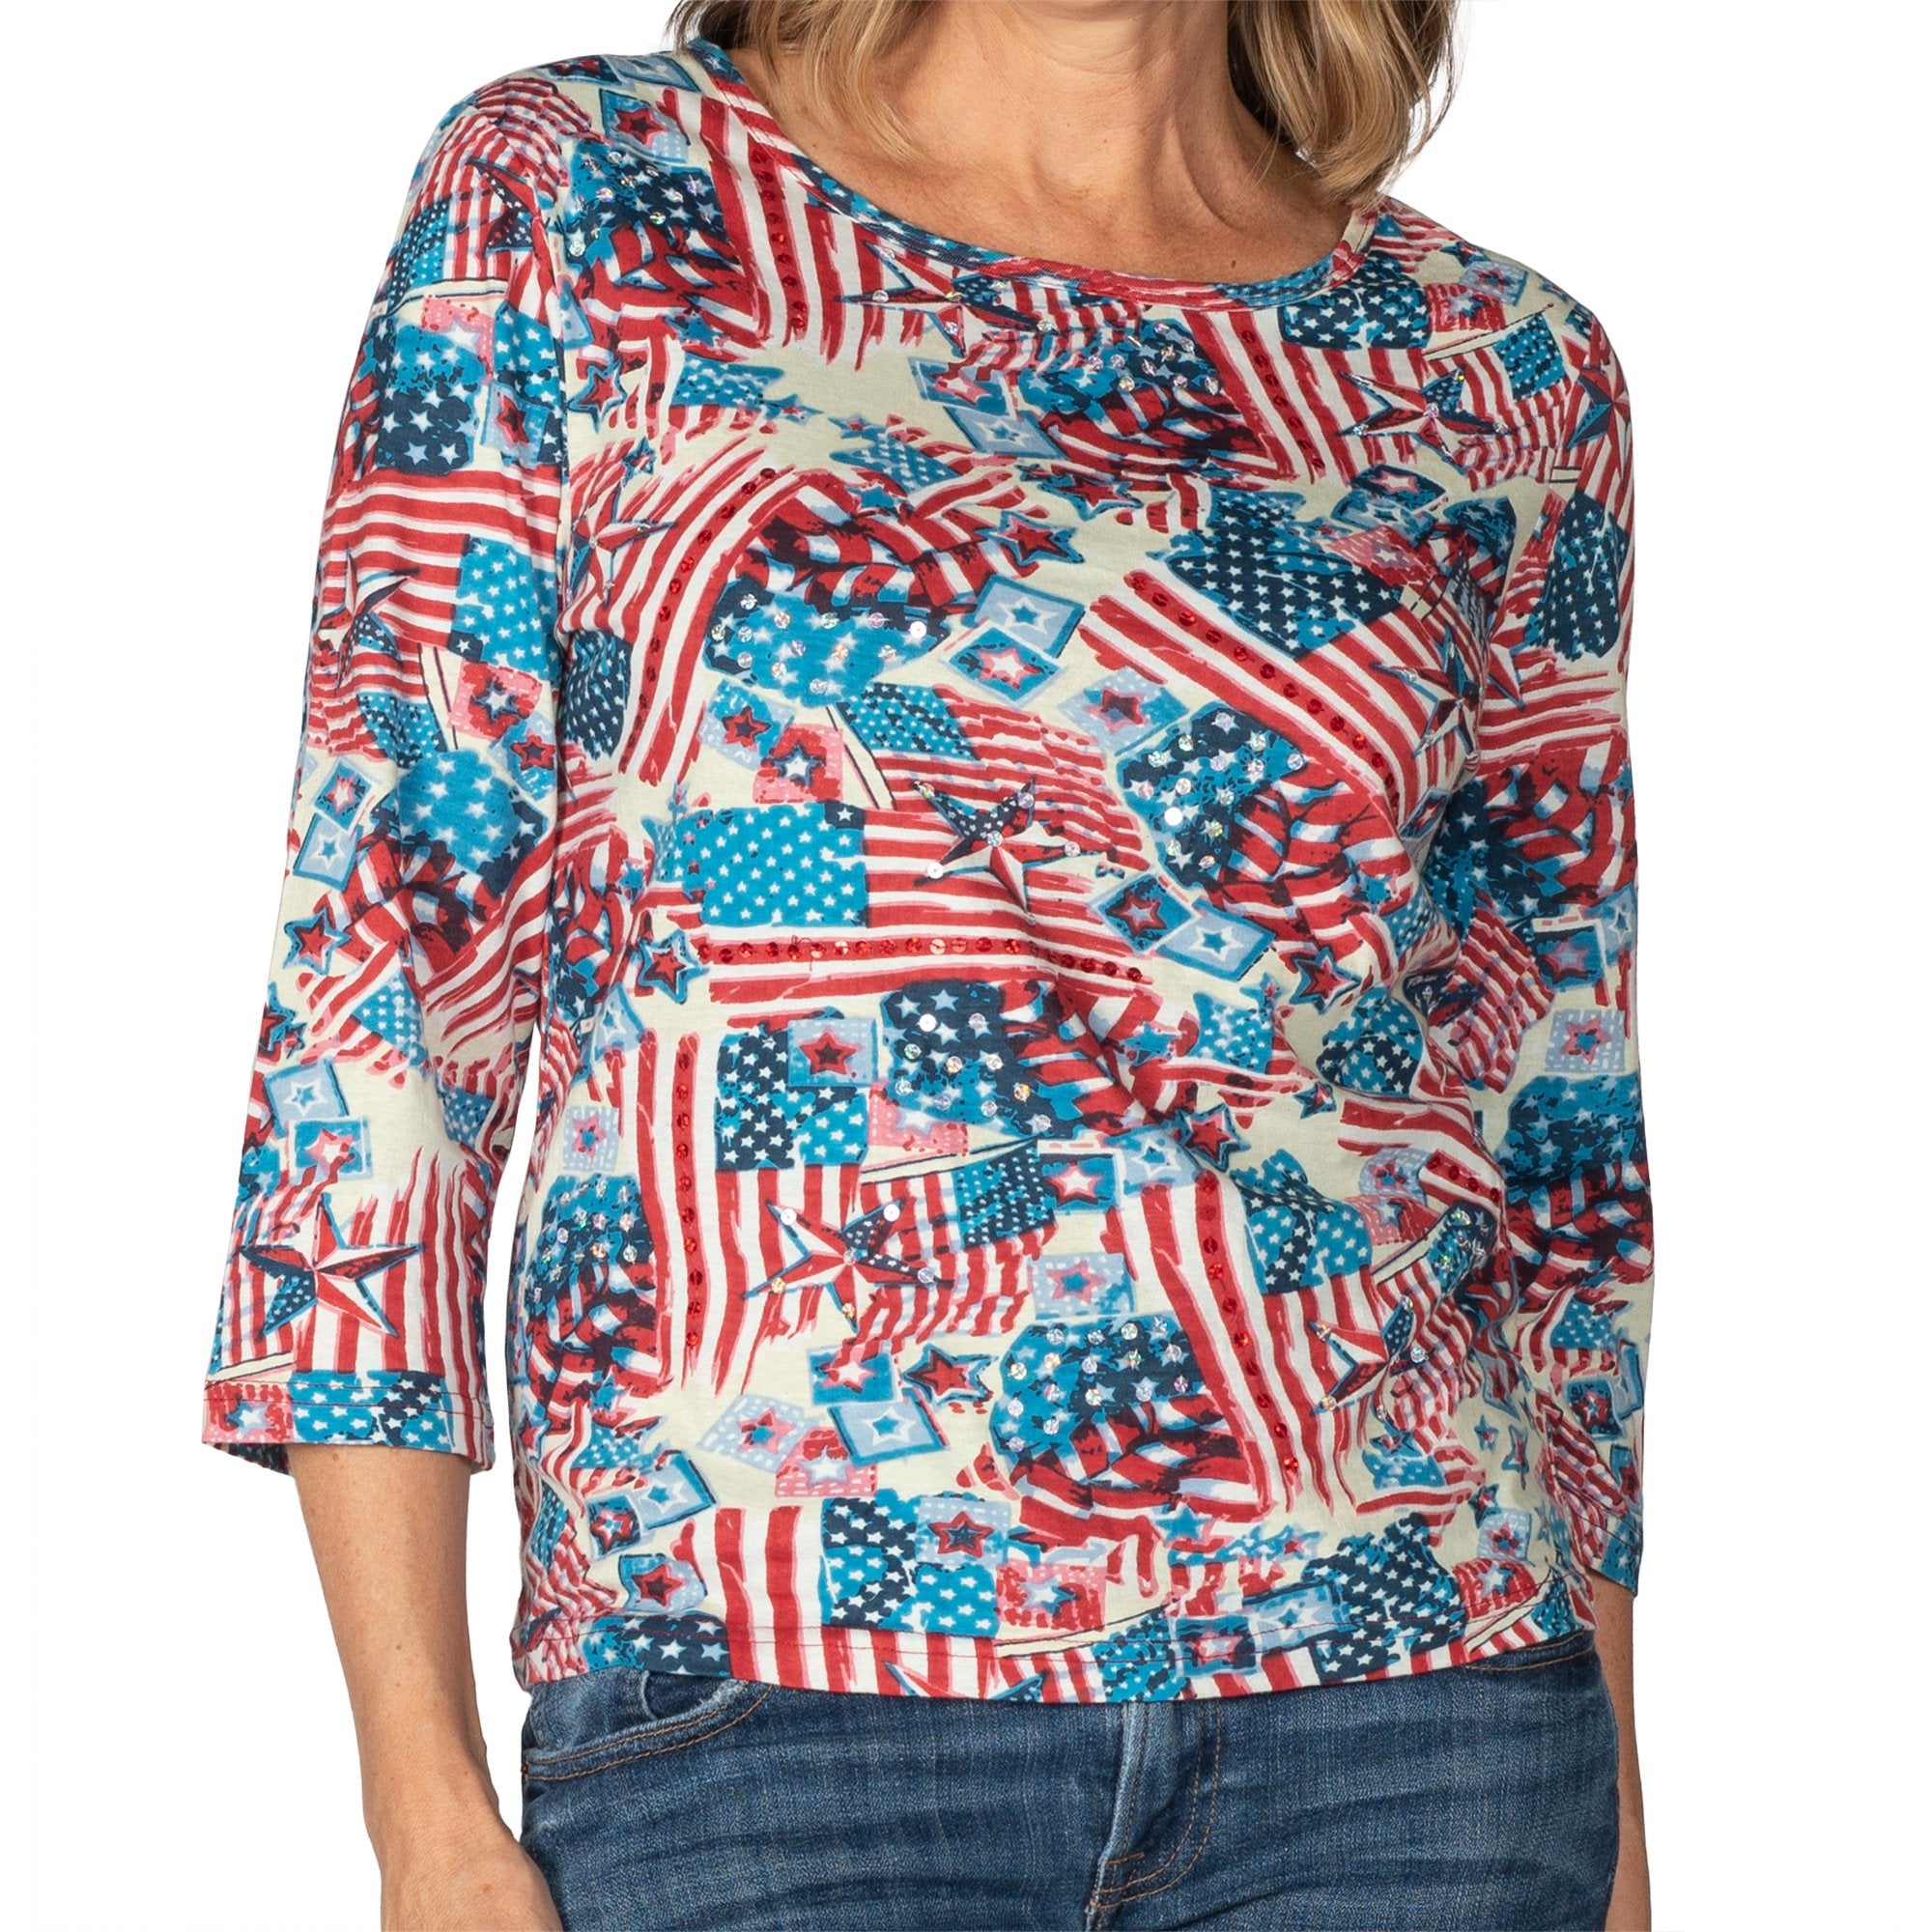 Women's USA Flag Mosaic 100% Cotton 3/4 Sleeve Shirt - the flag shirt